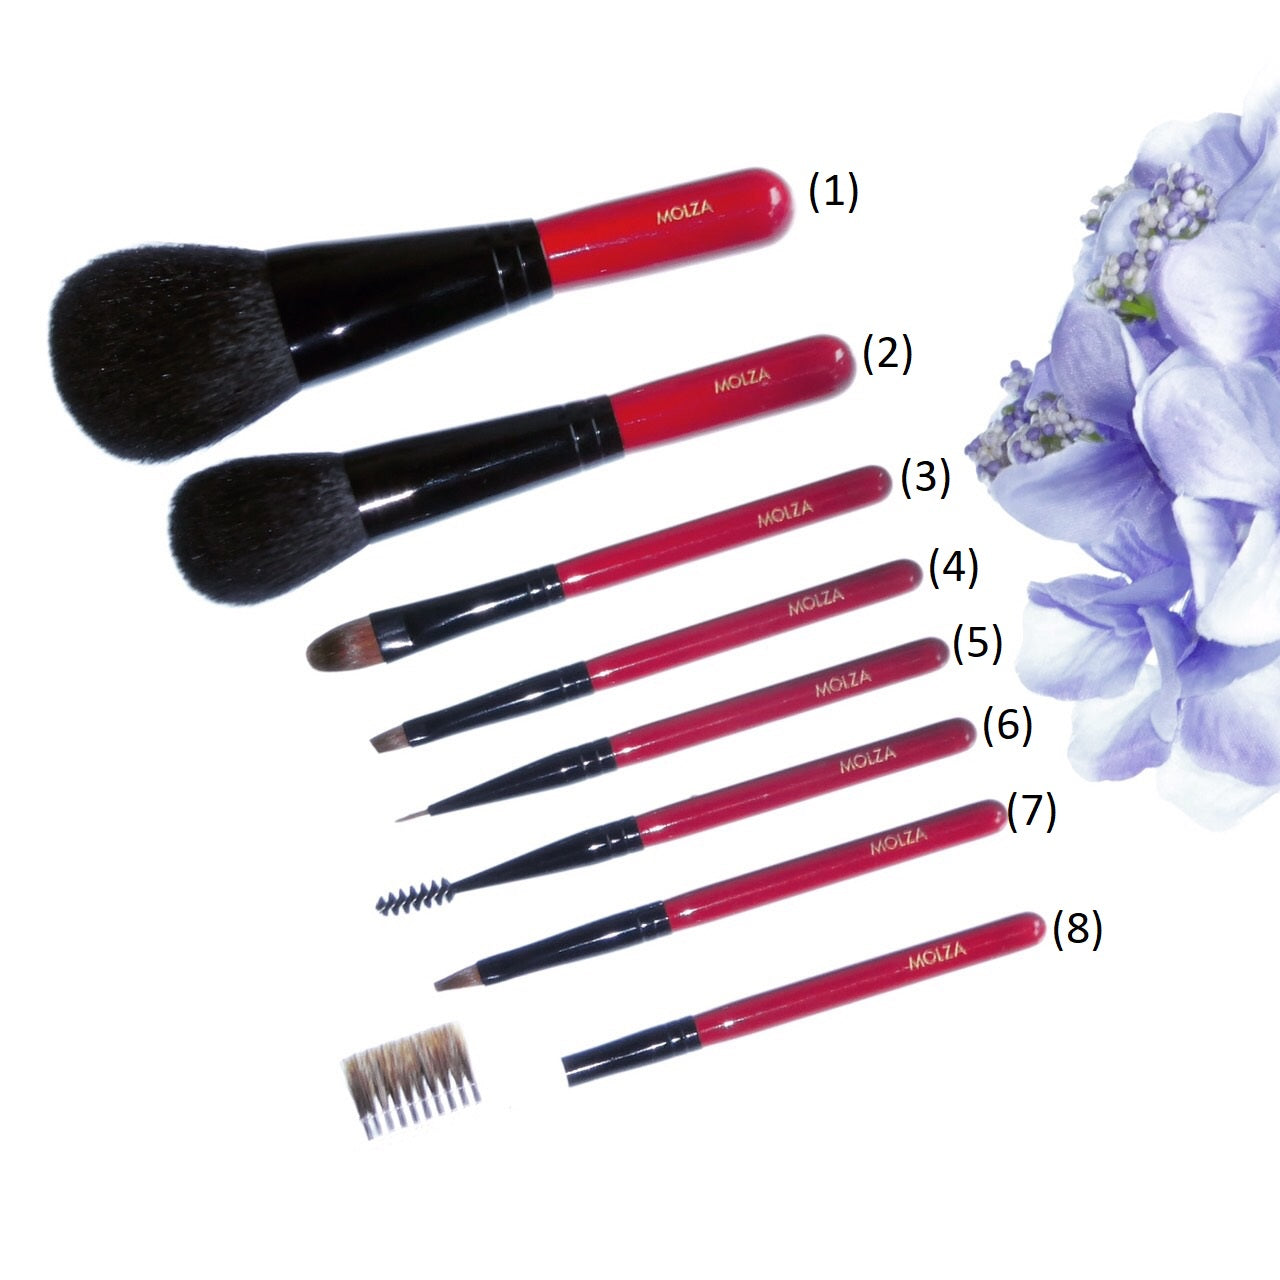 KUMANO Brush Makeup Powder Cheek Eye Shadow Brow Liner Lip Comb Screw 8 Type Set - JAPANESE GIFTS 